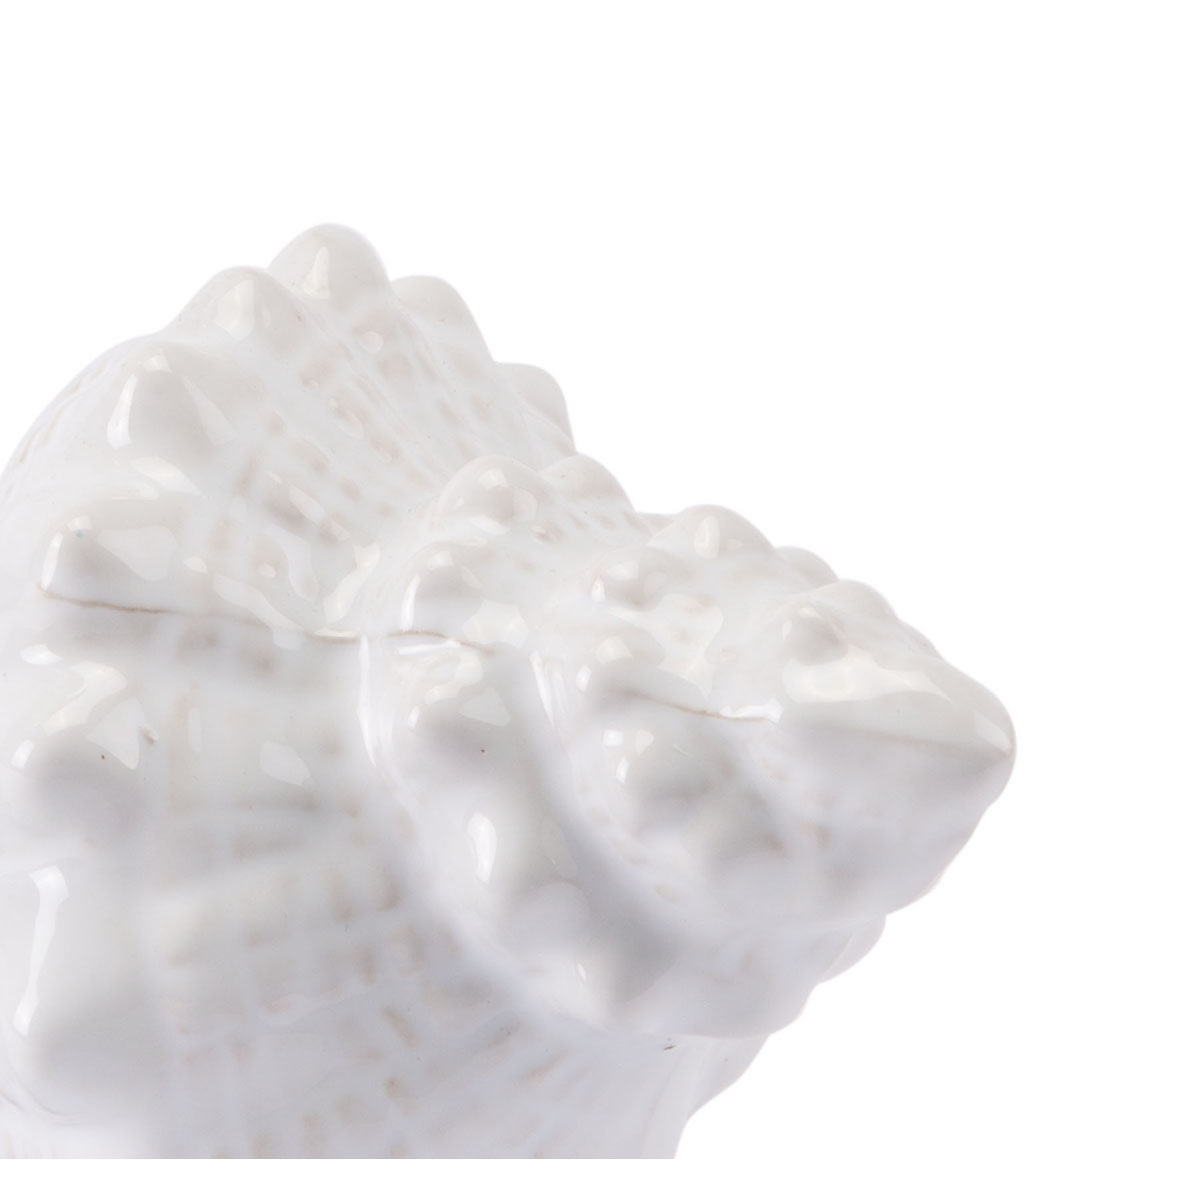 8.3" x 4.9" x 4.1" White, Ceramic, Small Shell